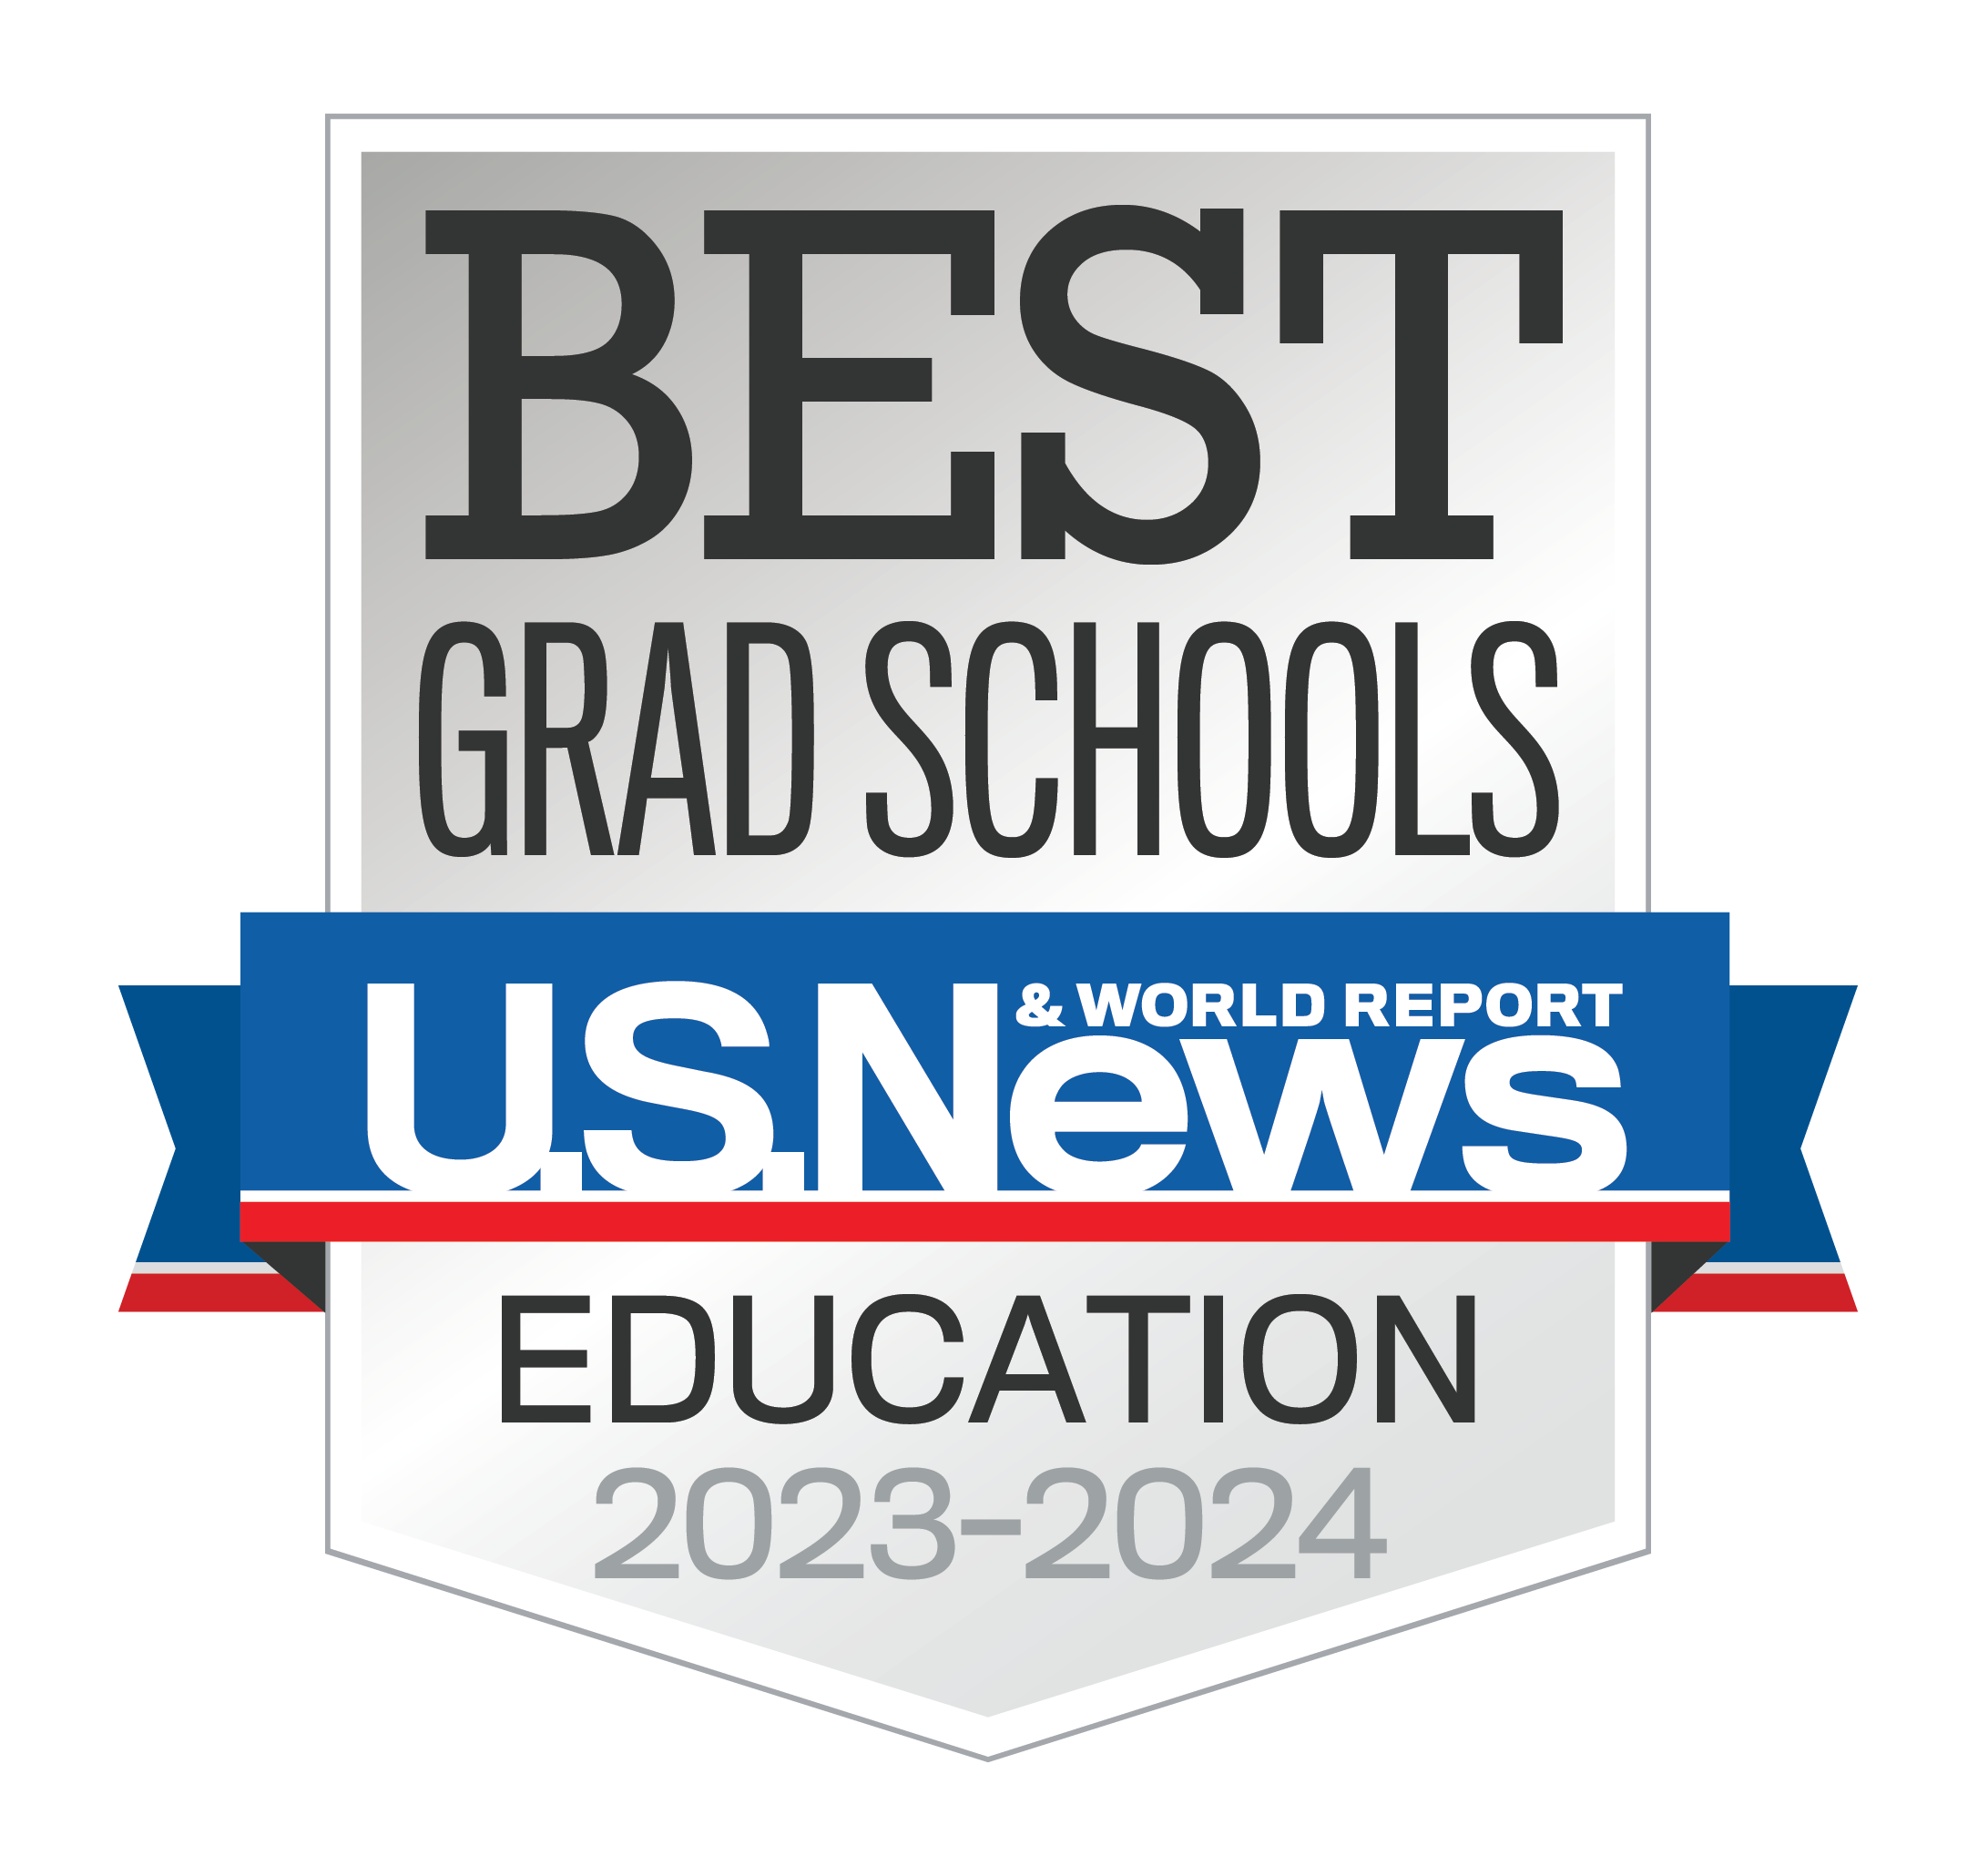 Best Grad Schools U.S.News & World Report Education 2023-2024